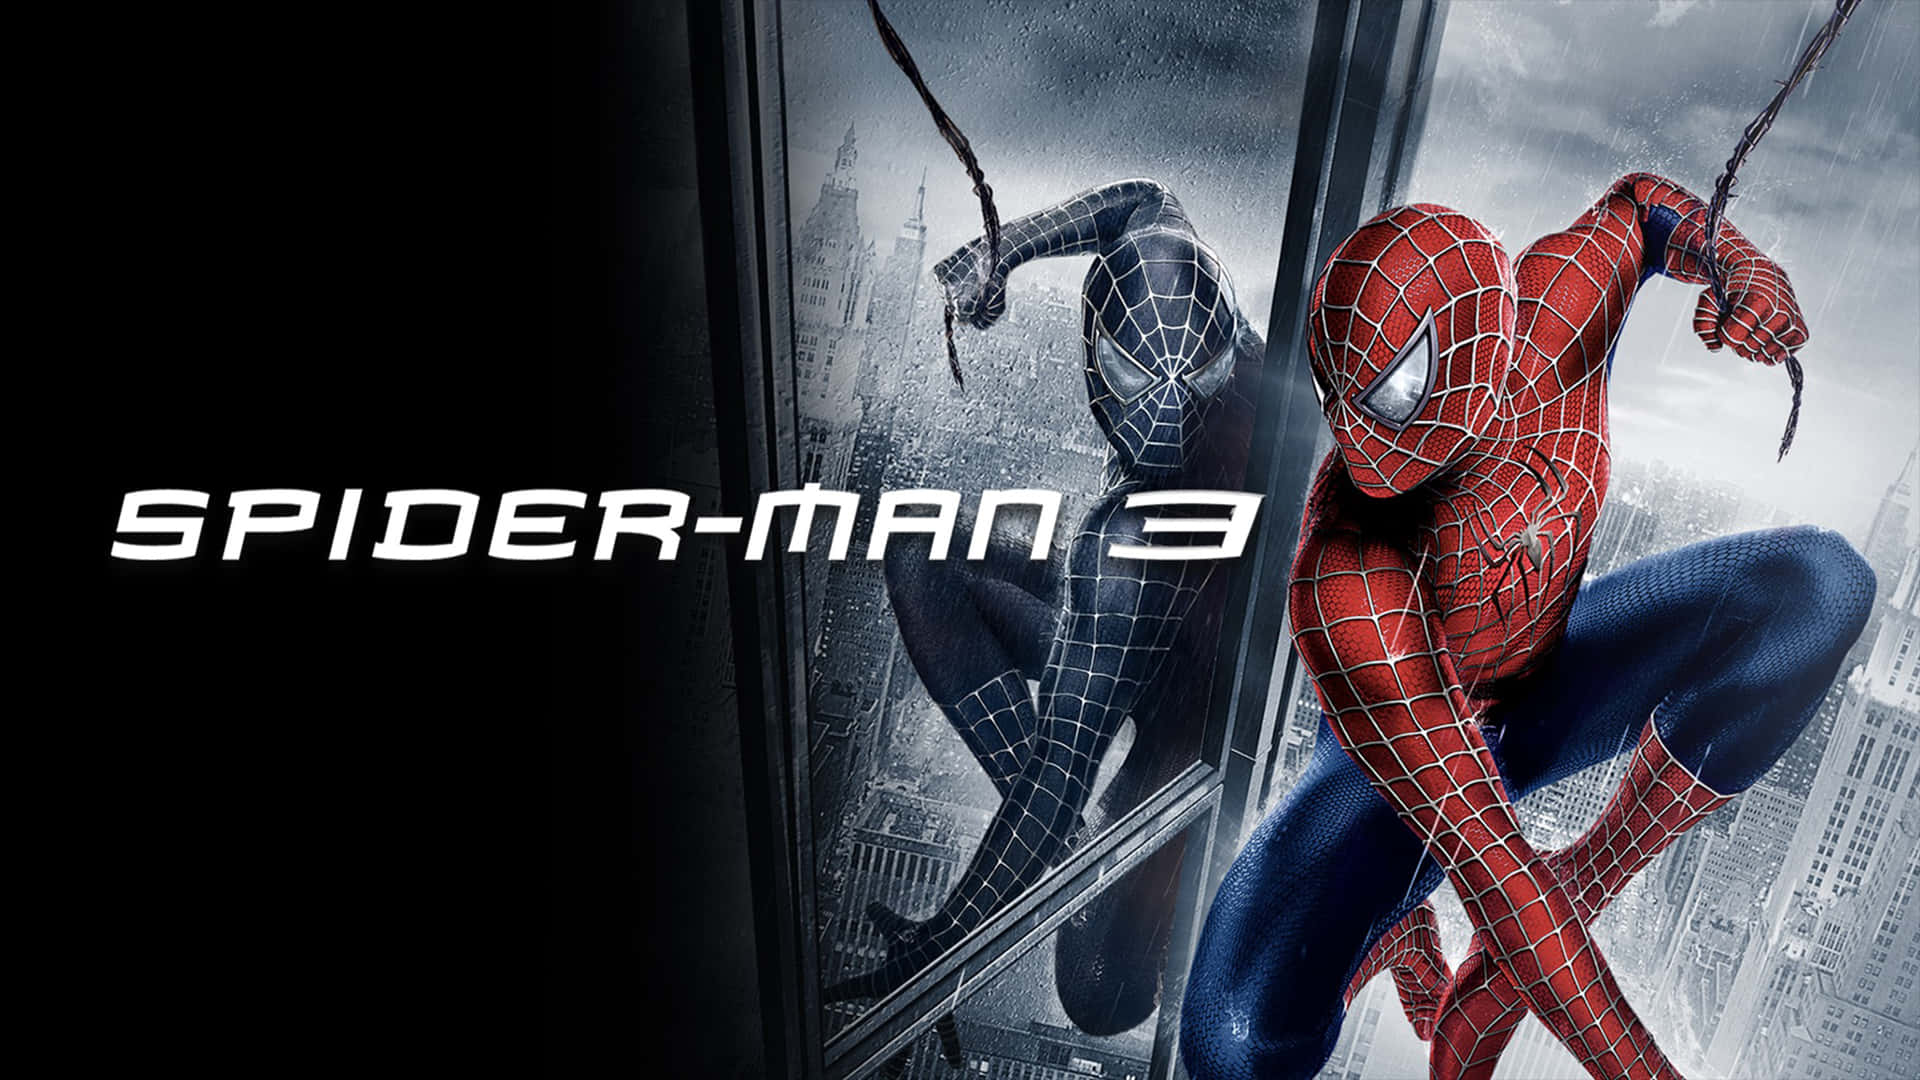 Spider-Man 3 - The Web-Slinging Superhero in Action Wallpaper